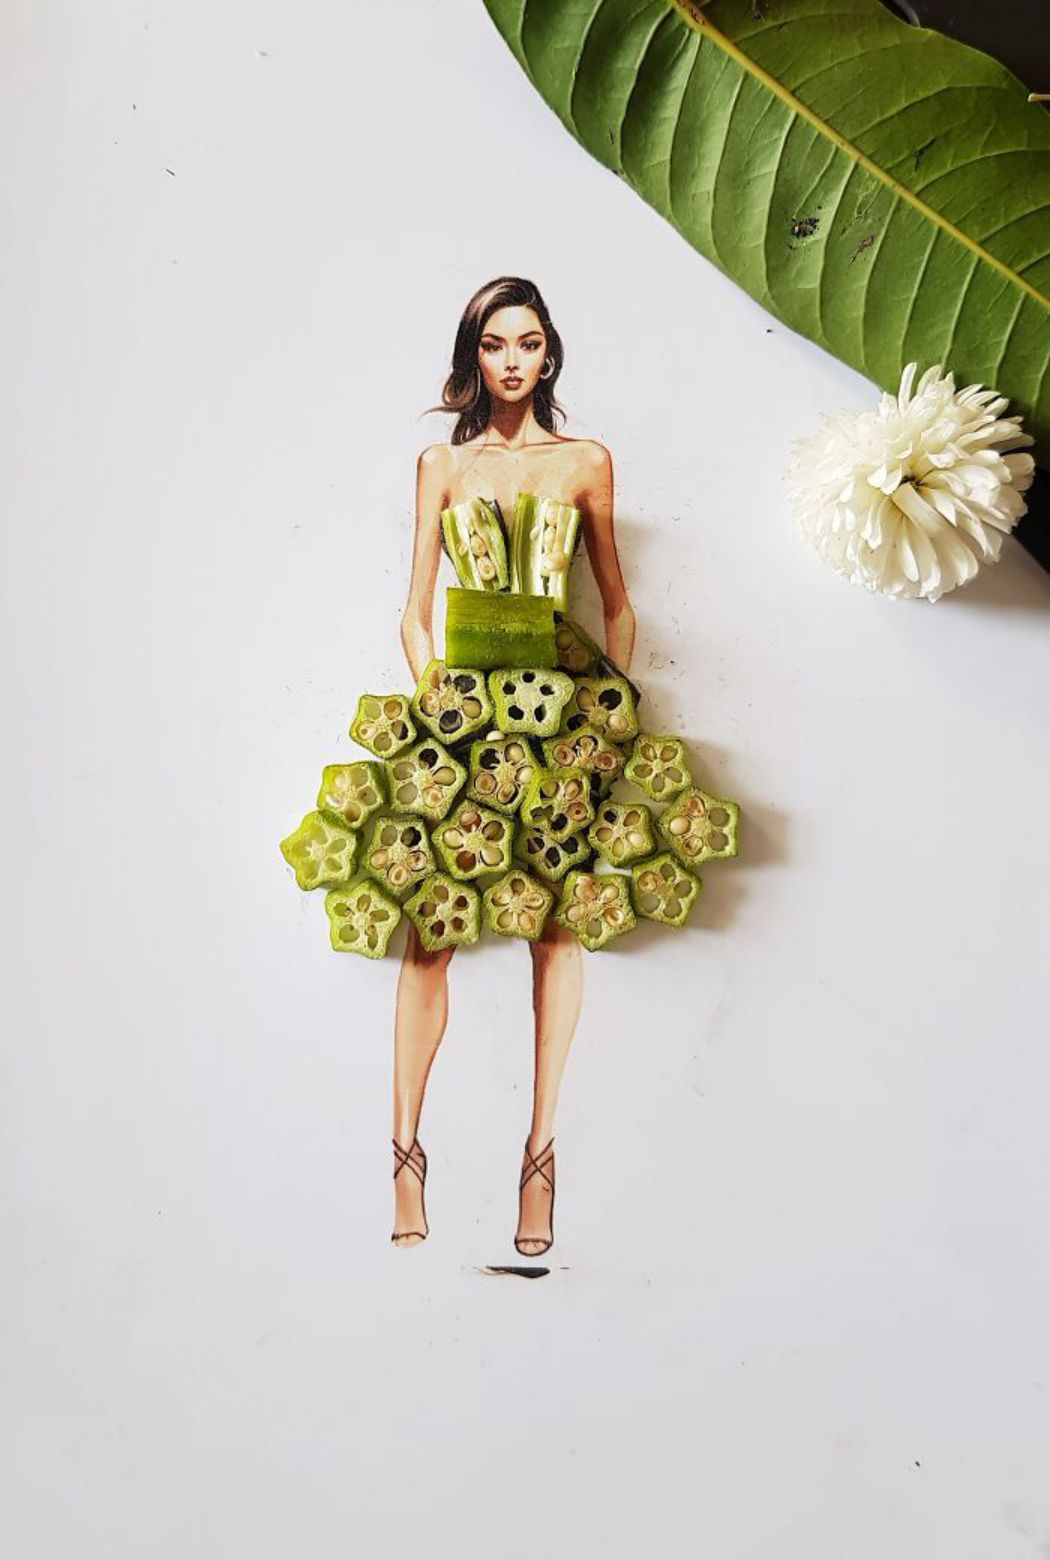 Digital Artist Monika Creates Unique Dresses Using Pulses, Fruit, And Vegetables (10)